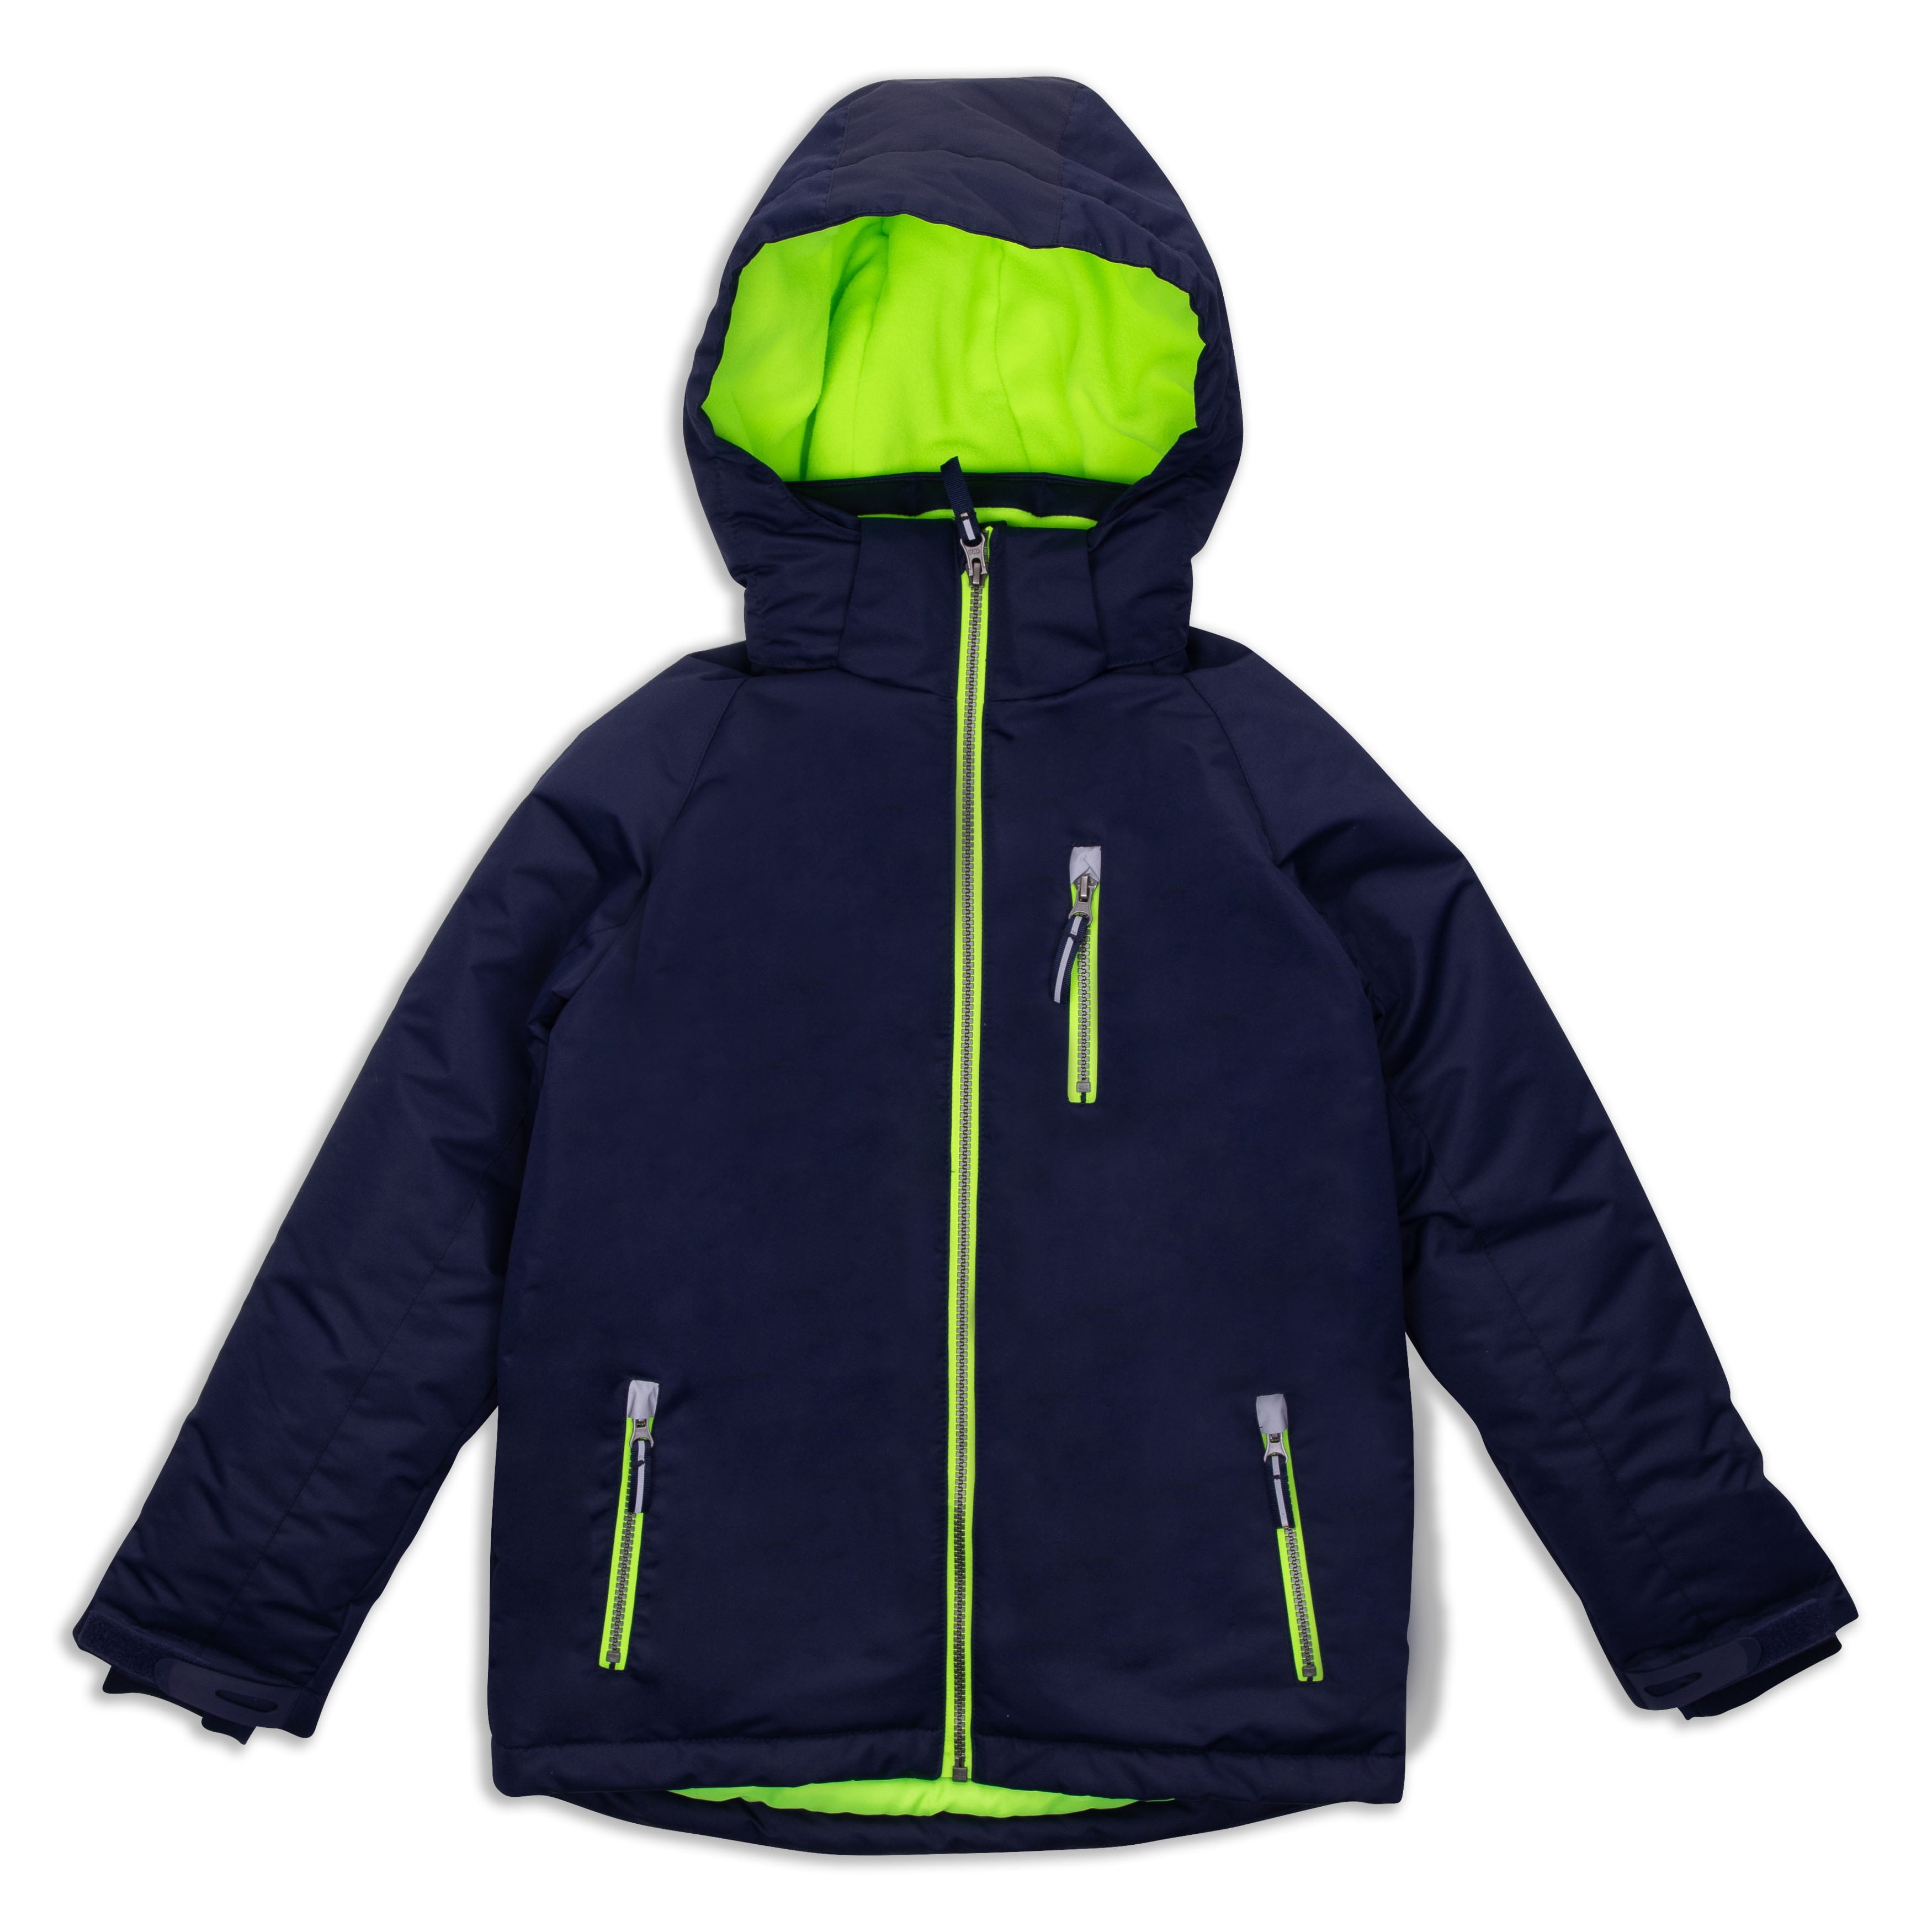 Size US 4-16 Boys Ski Jacket Snow Jacket Pants Suits Windproof Waterproof Winter Coats 